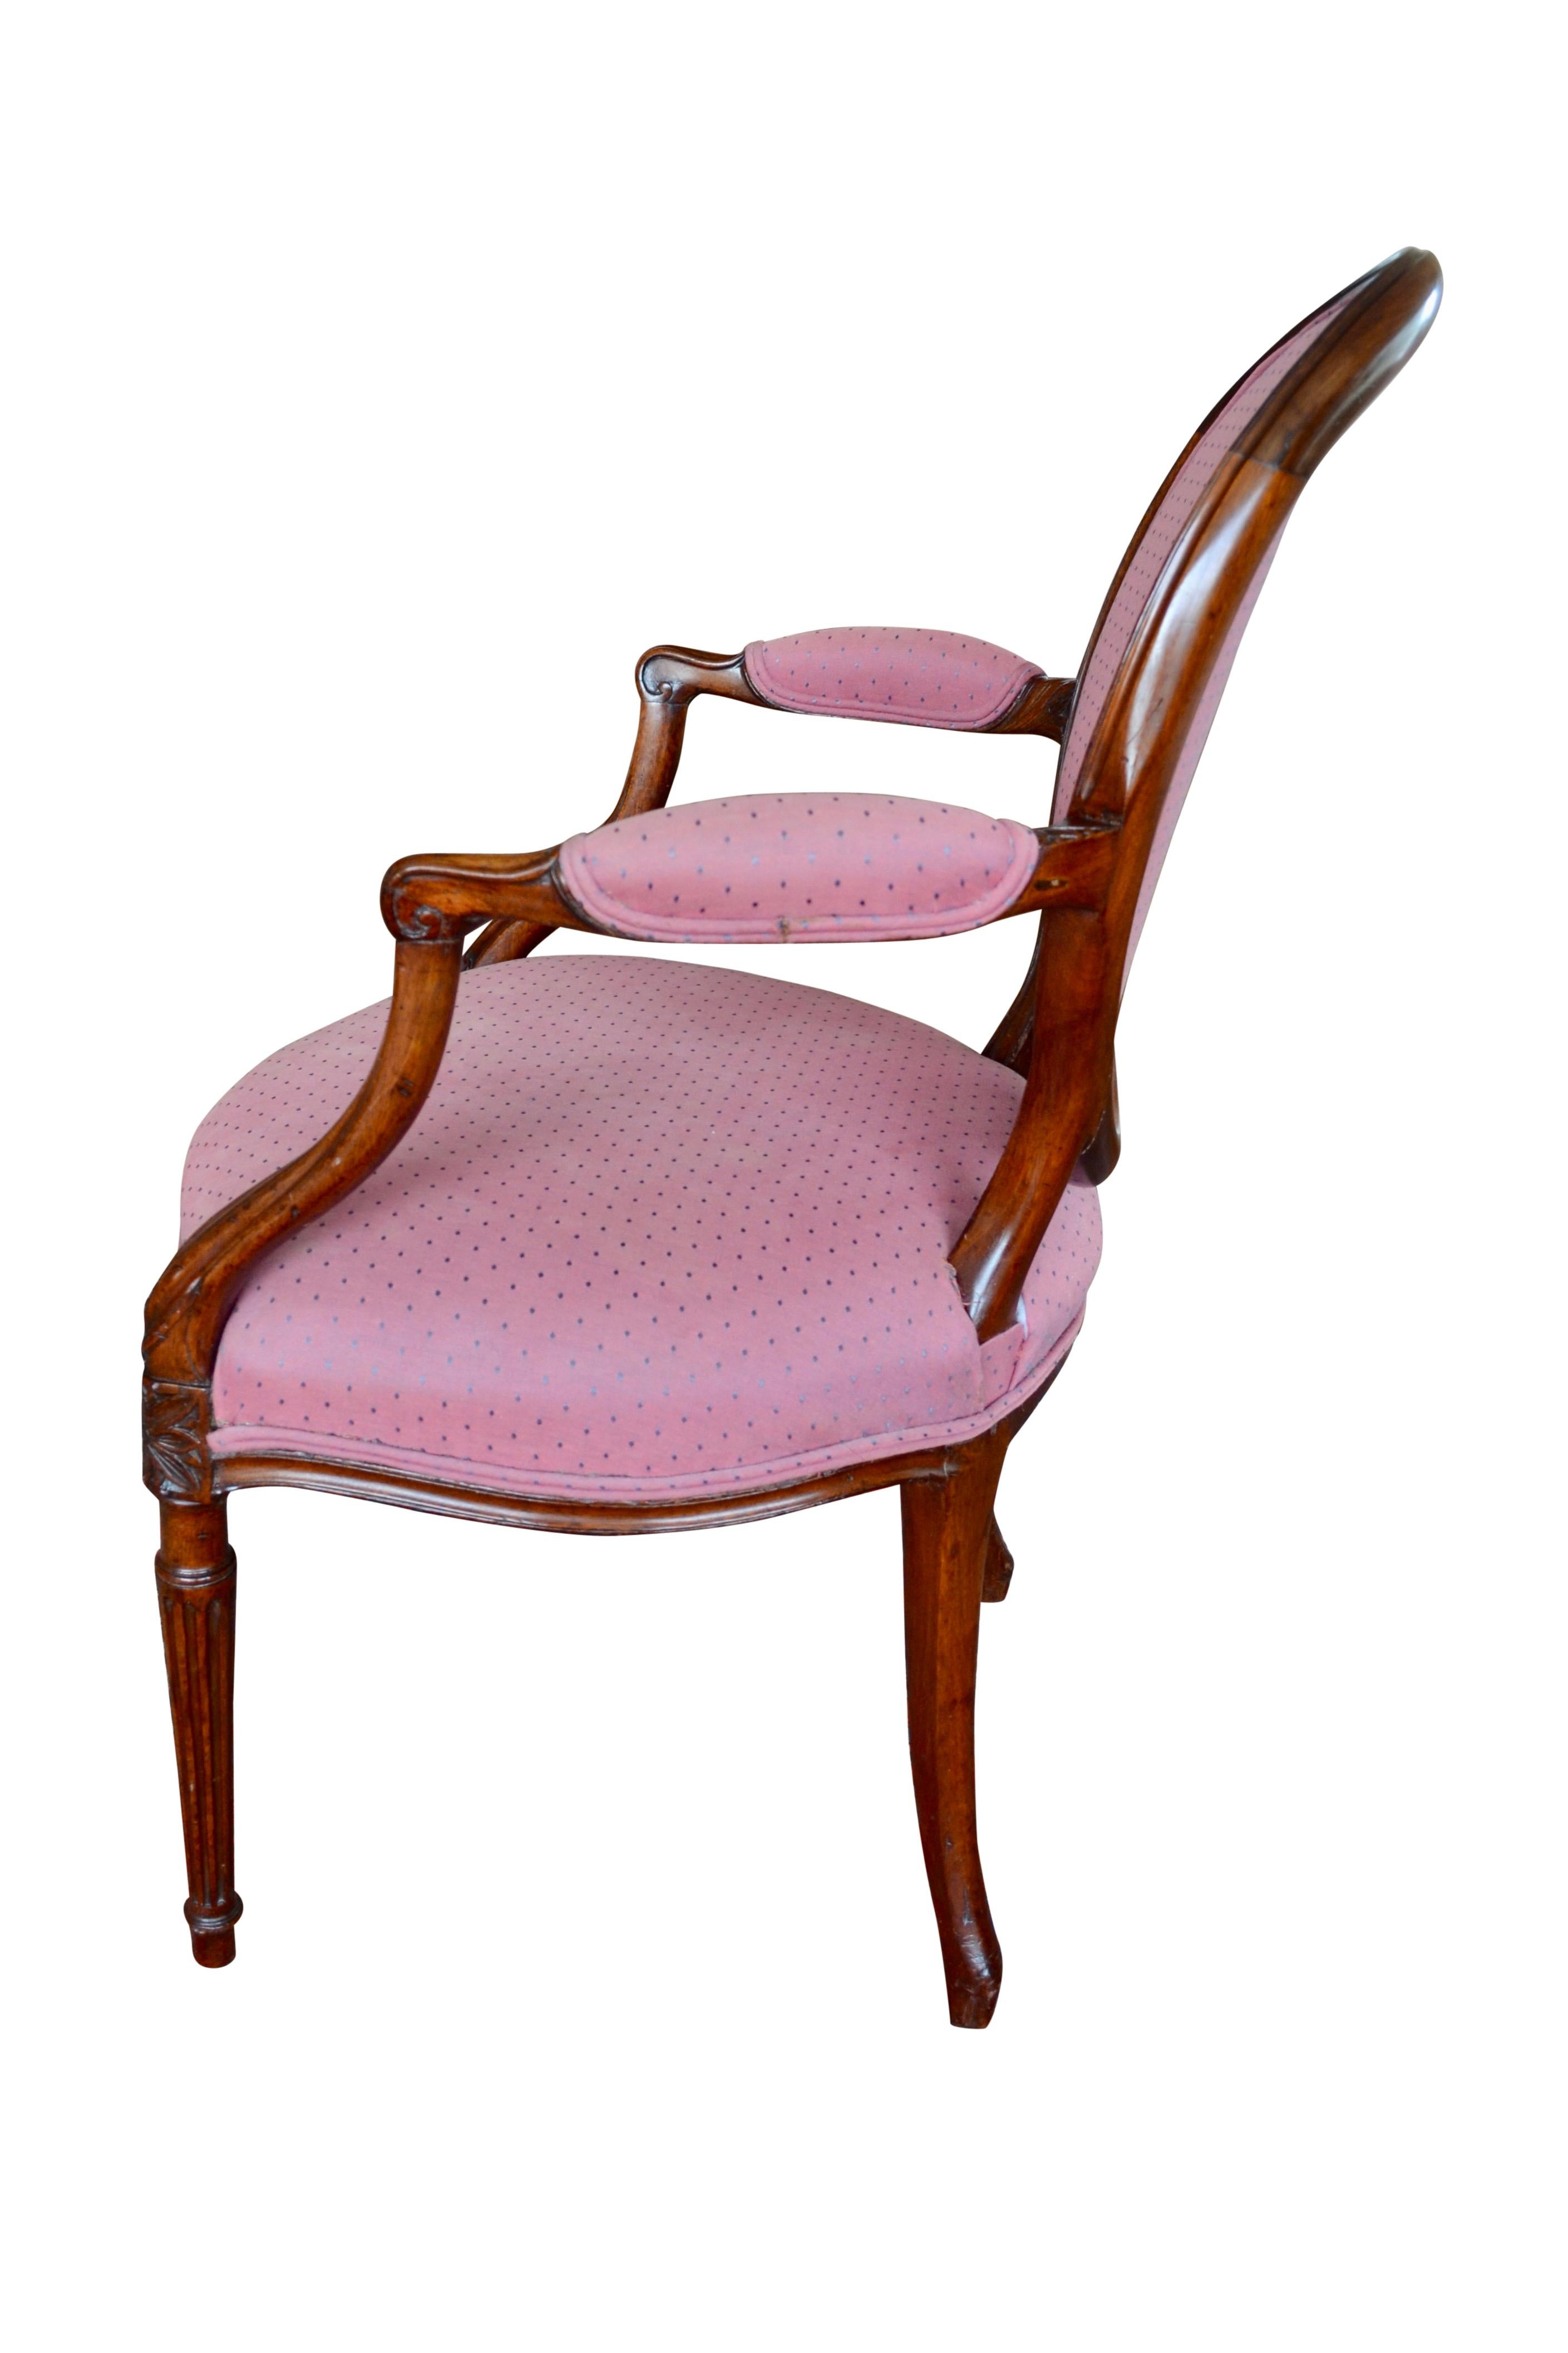 hepplewhite style chair